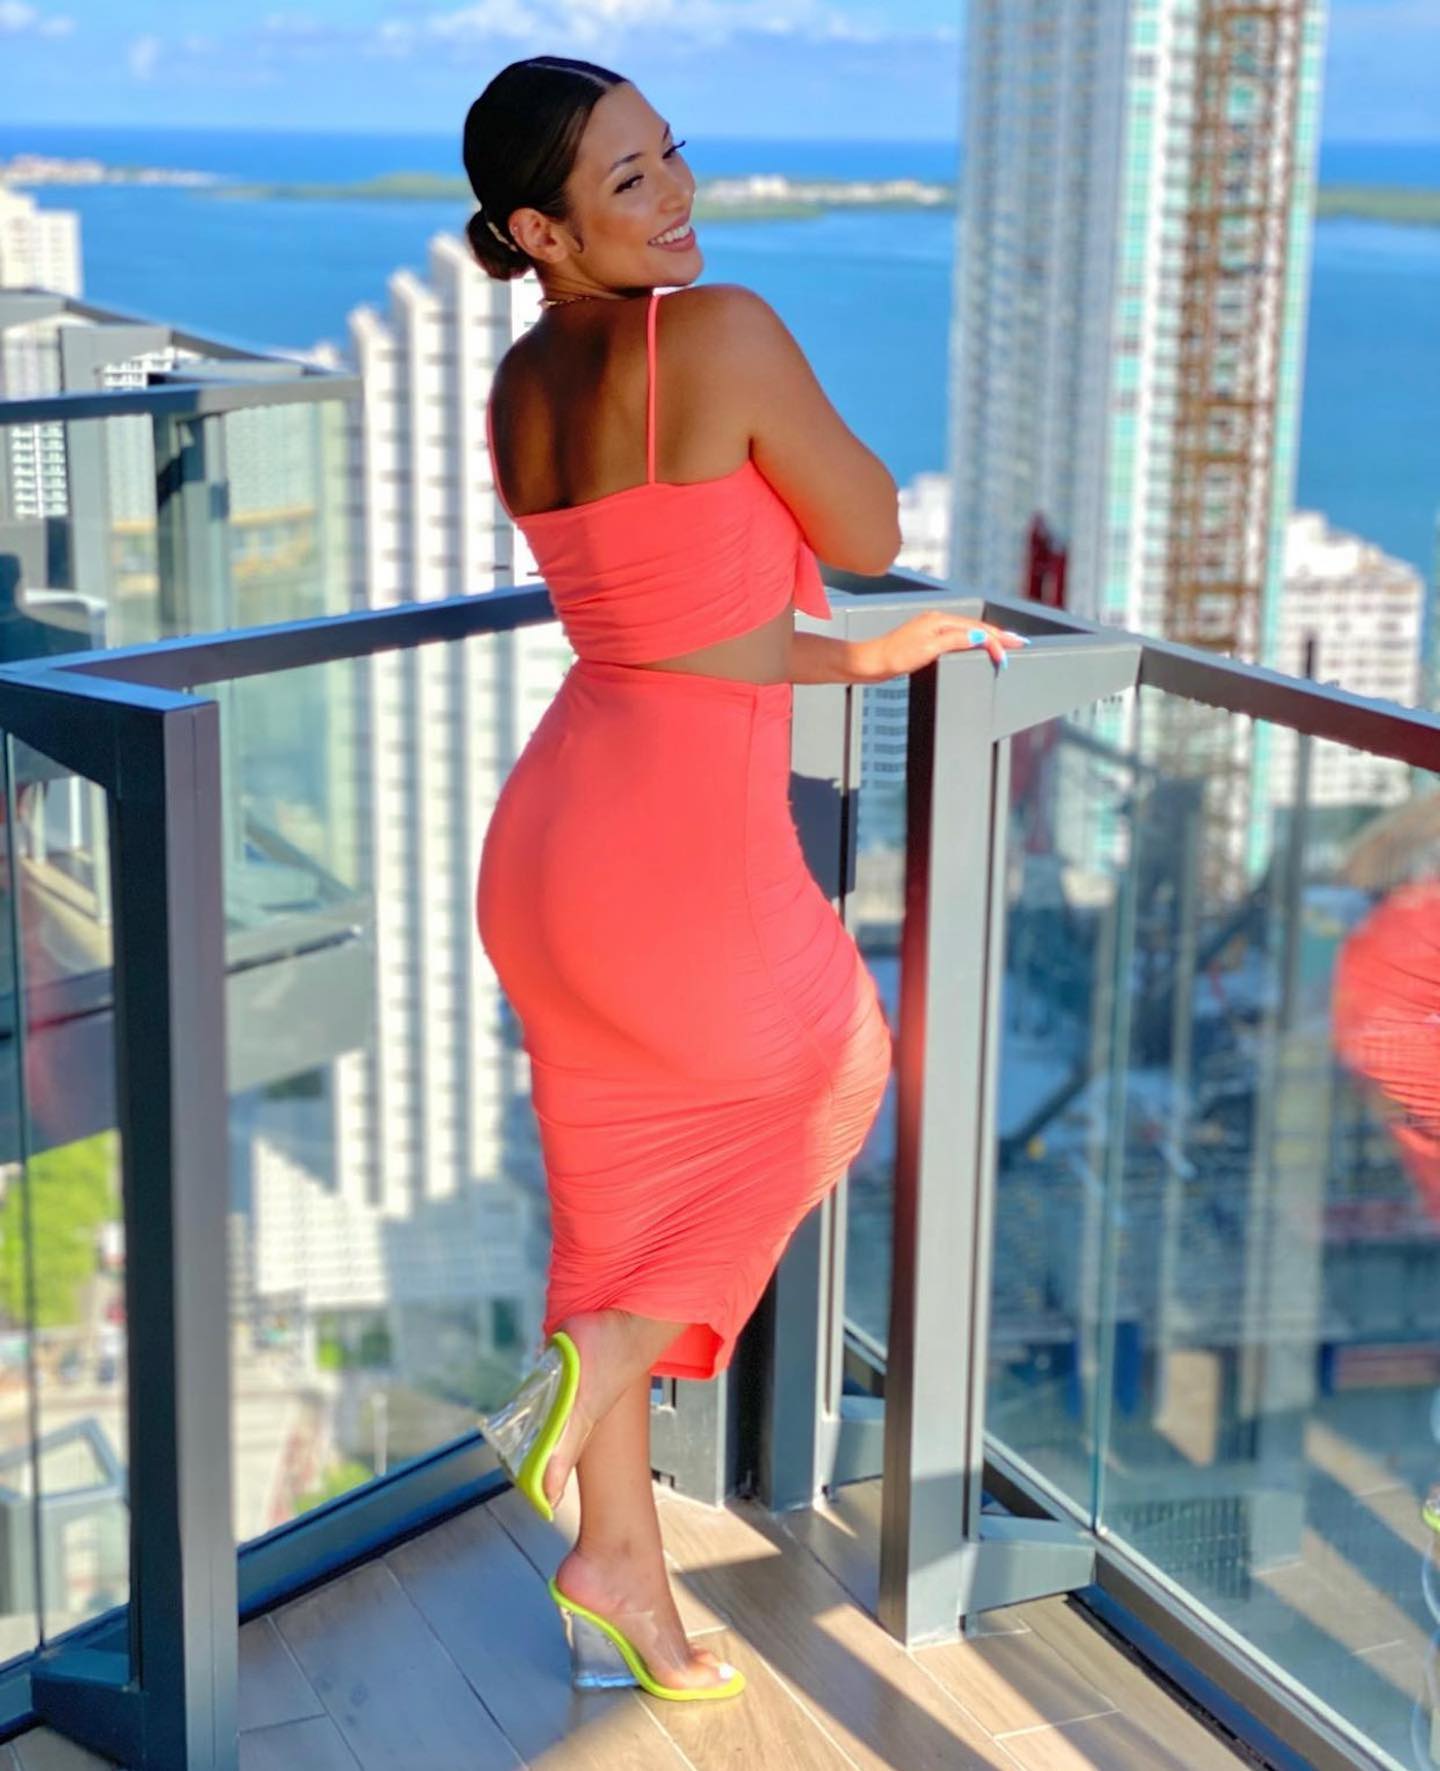 Soaking up the Miami sun high above the city #atEAST

📷 @amaya_kaisia